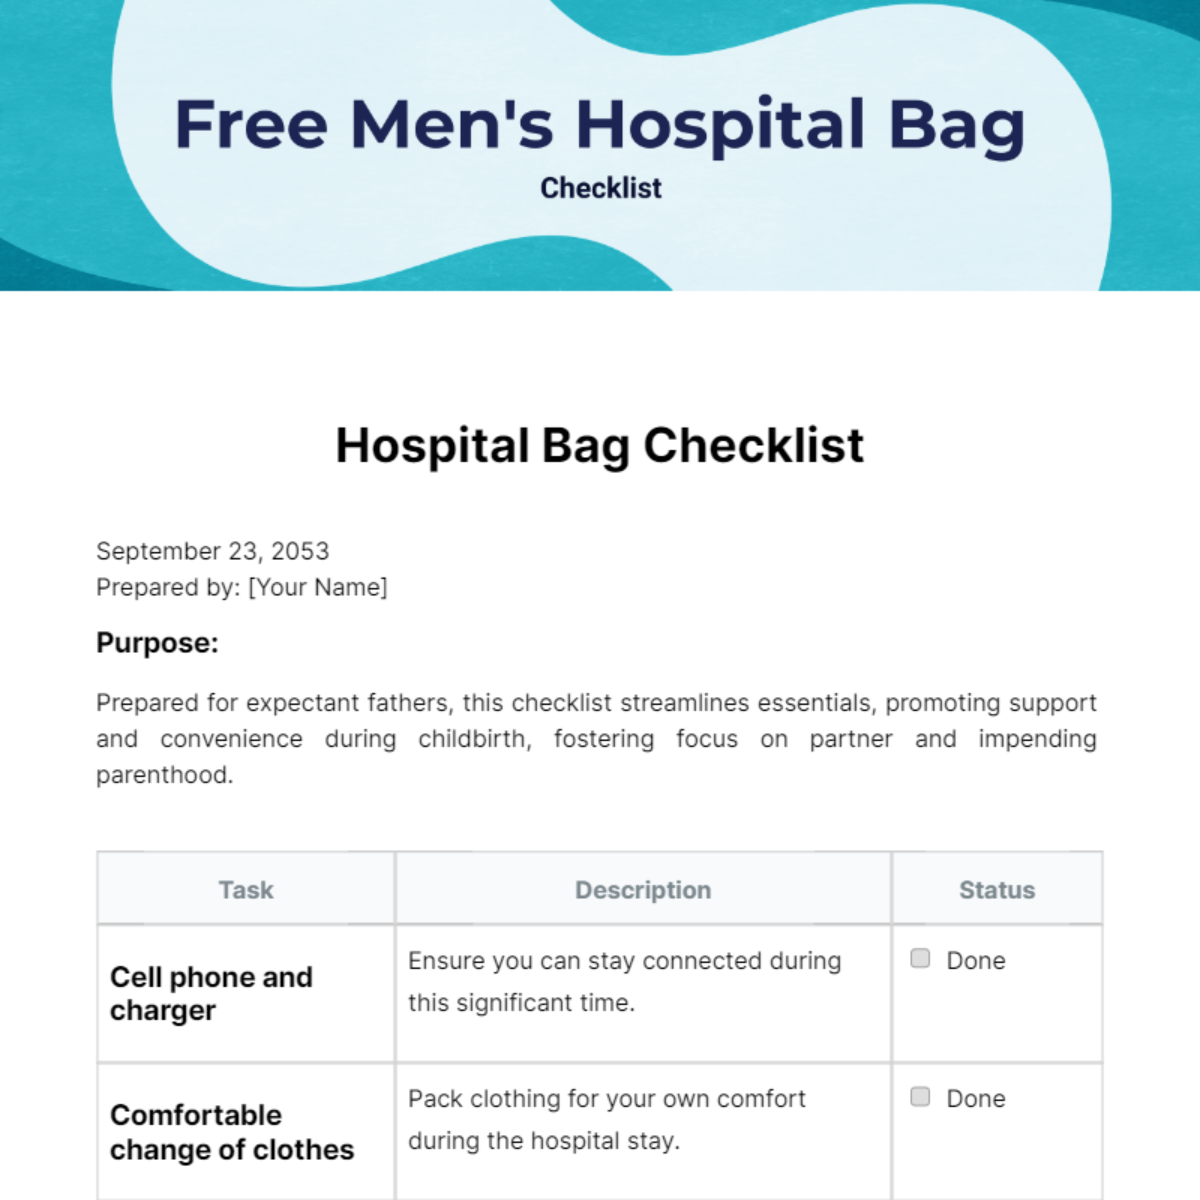 Free Men's Hospital Bag Checklist Template